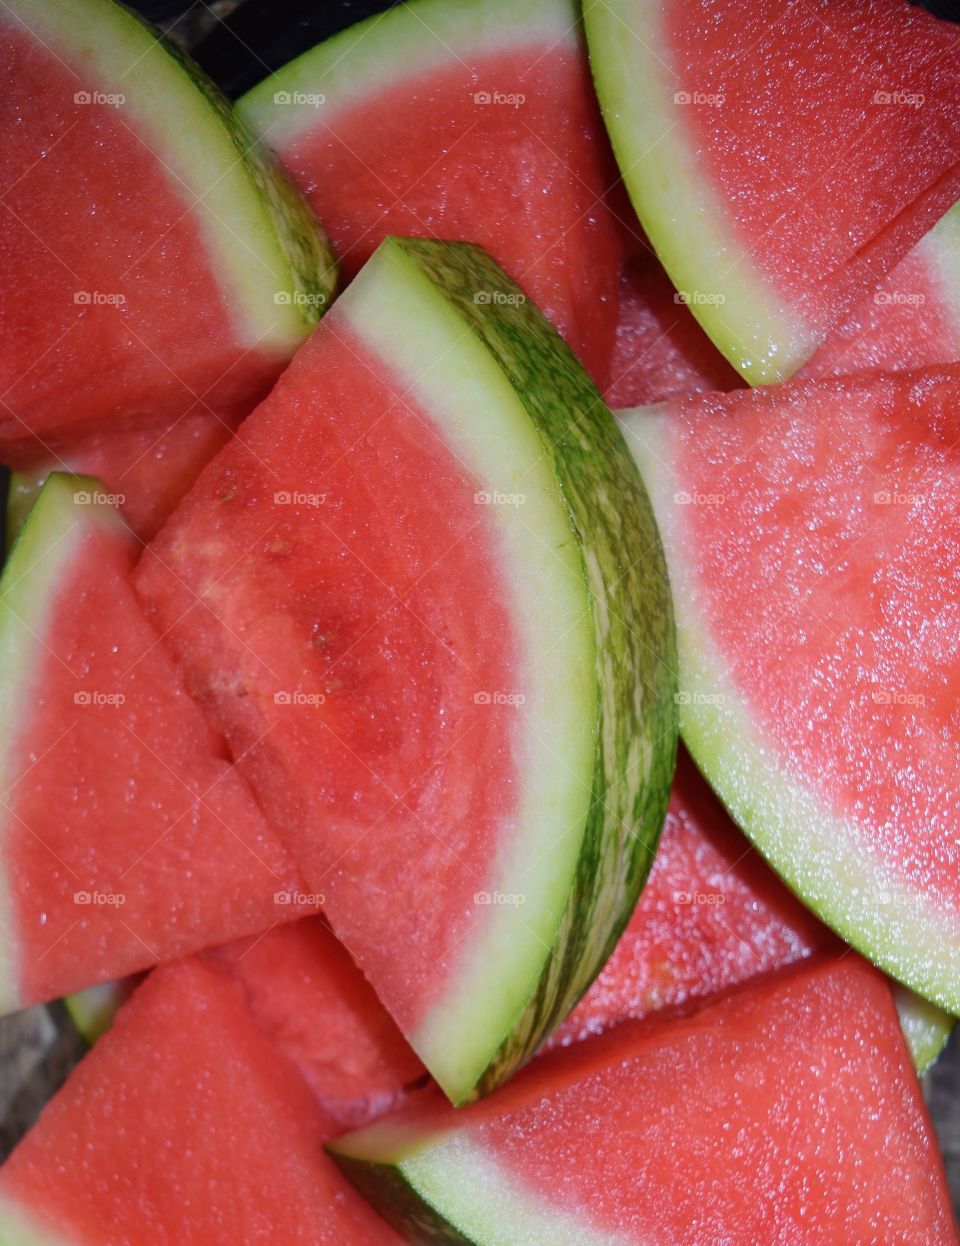 Watermelon slices 